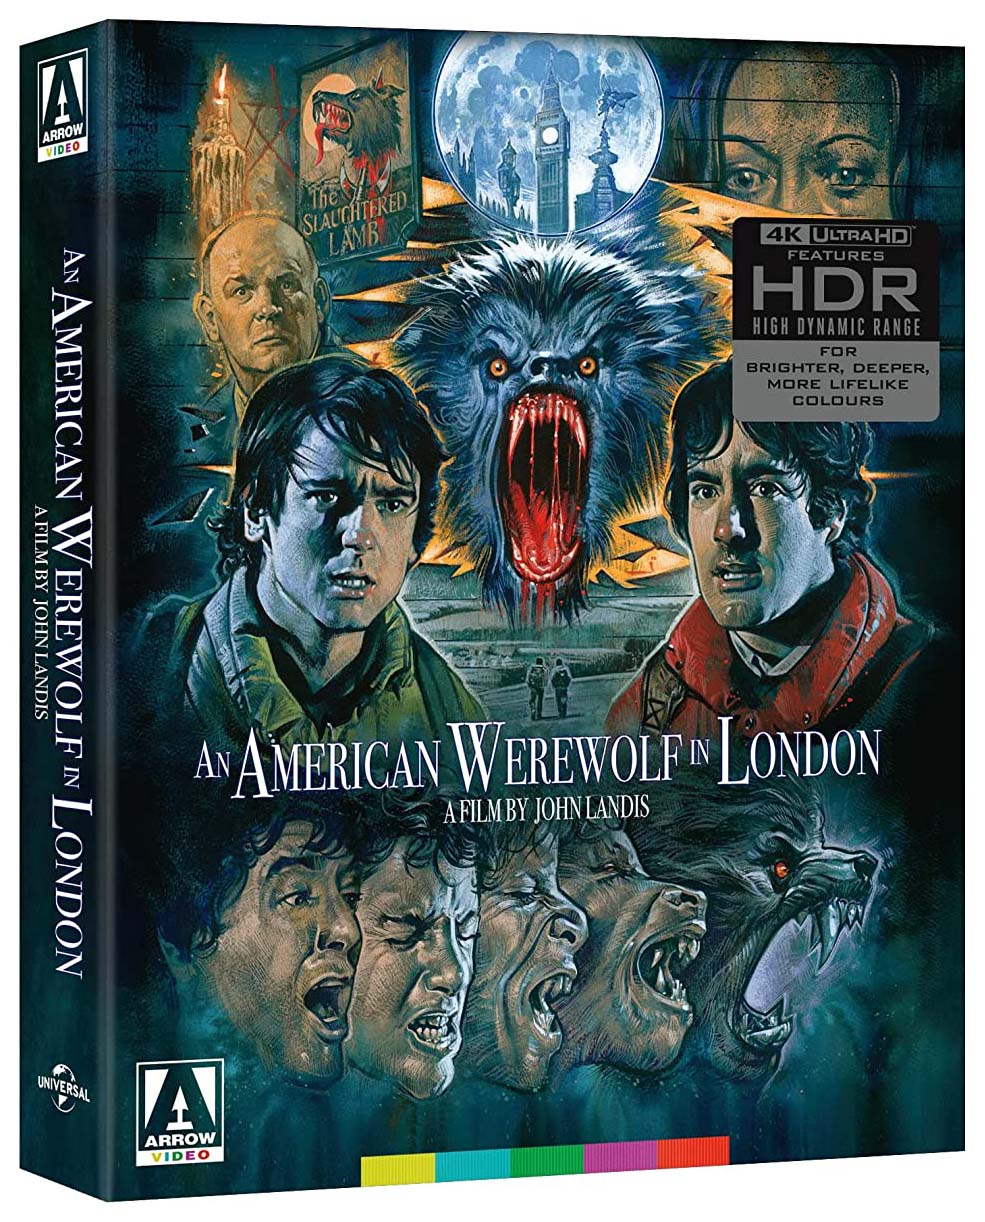 An American Werewolf in London 4k Blu-ray Limited Edition